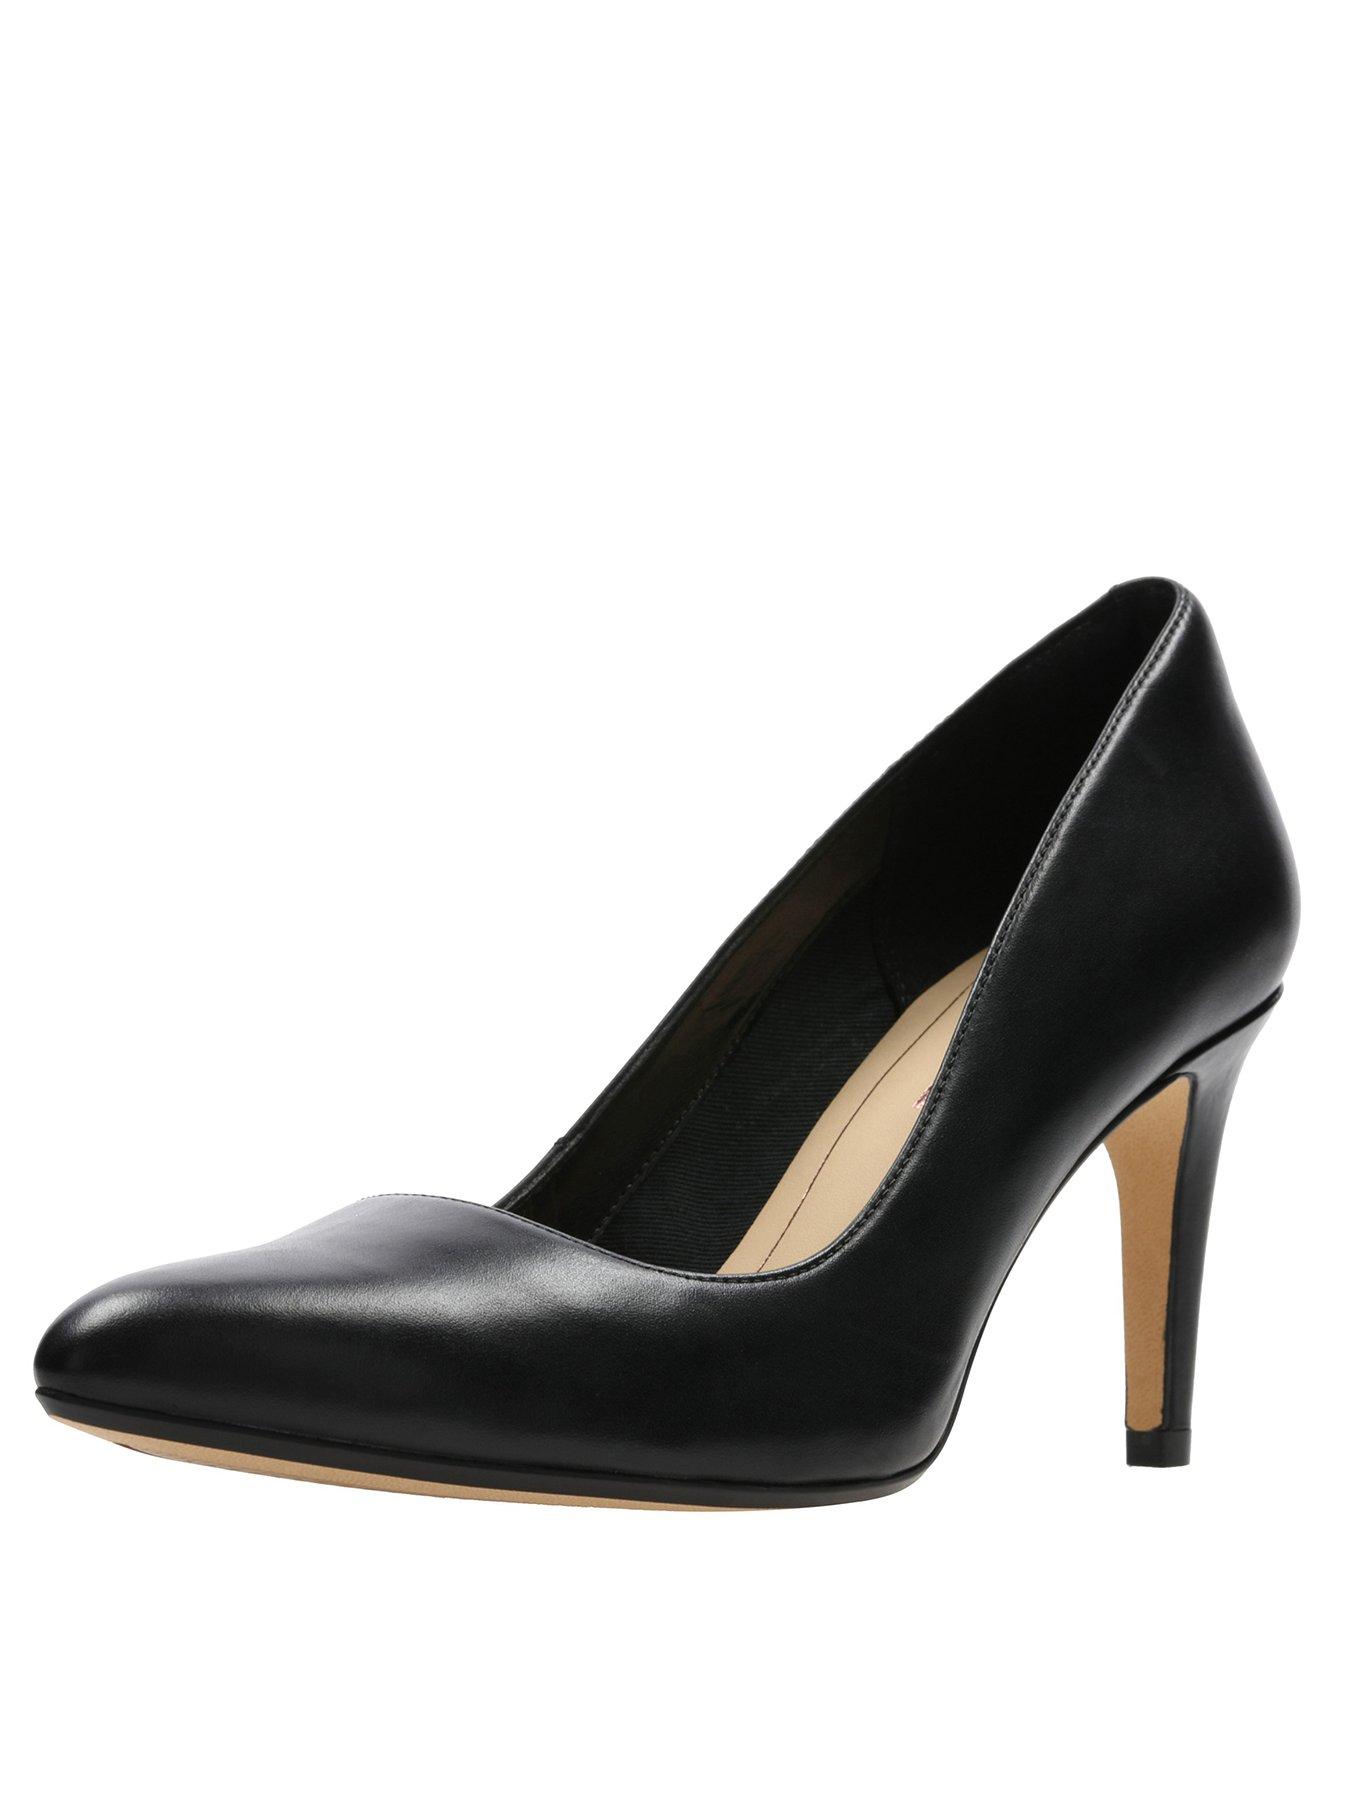 clarks leather heels